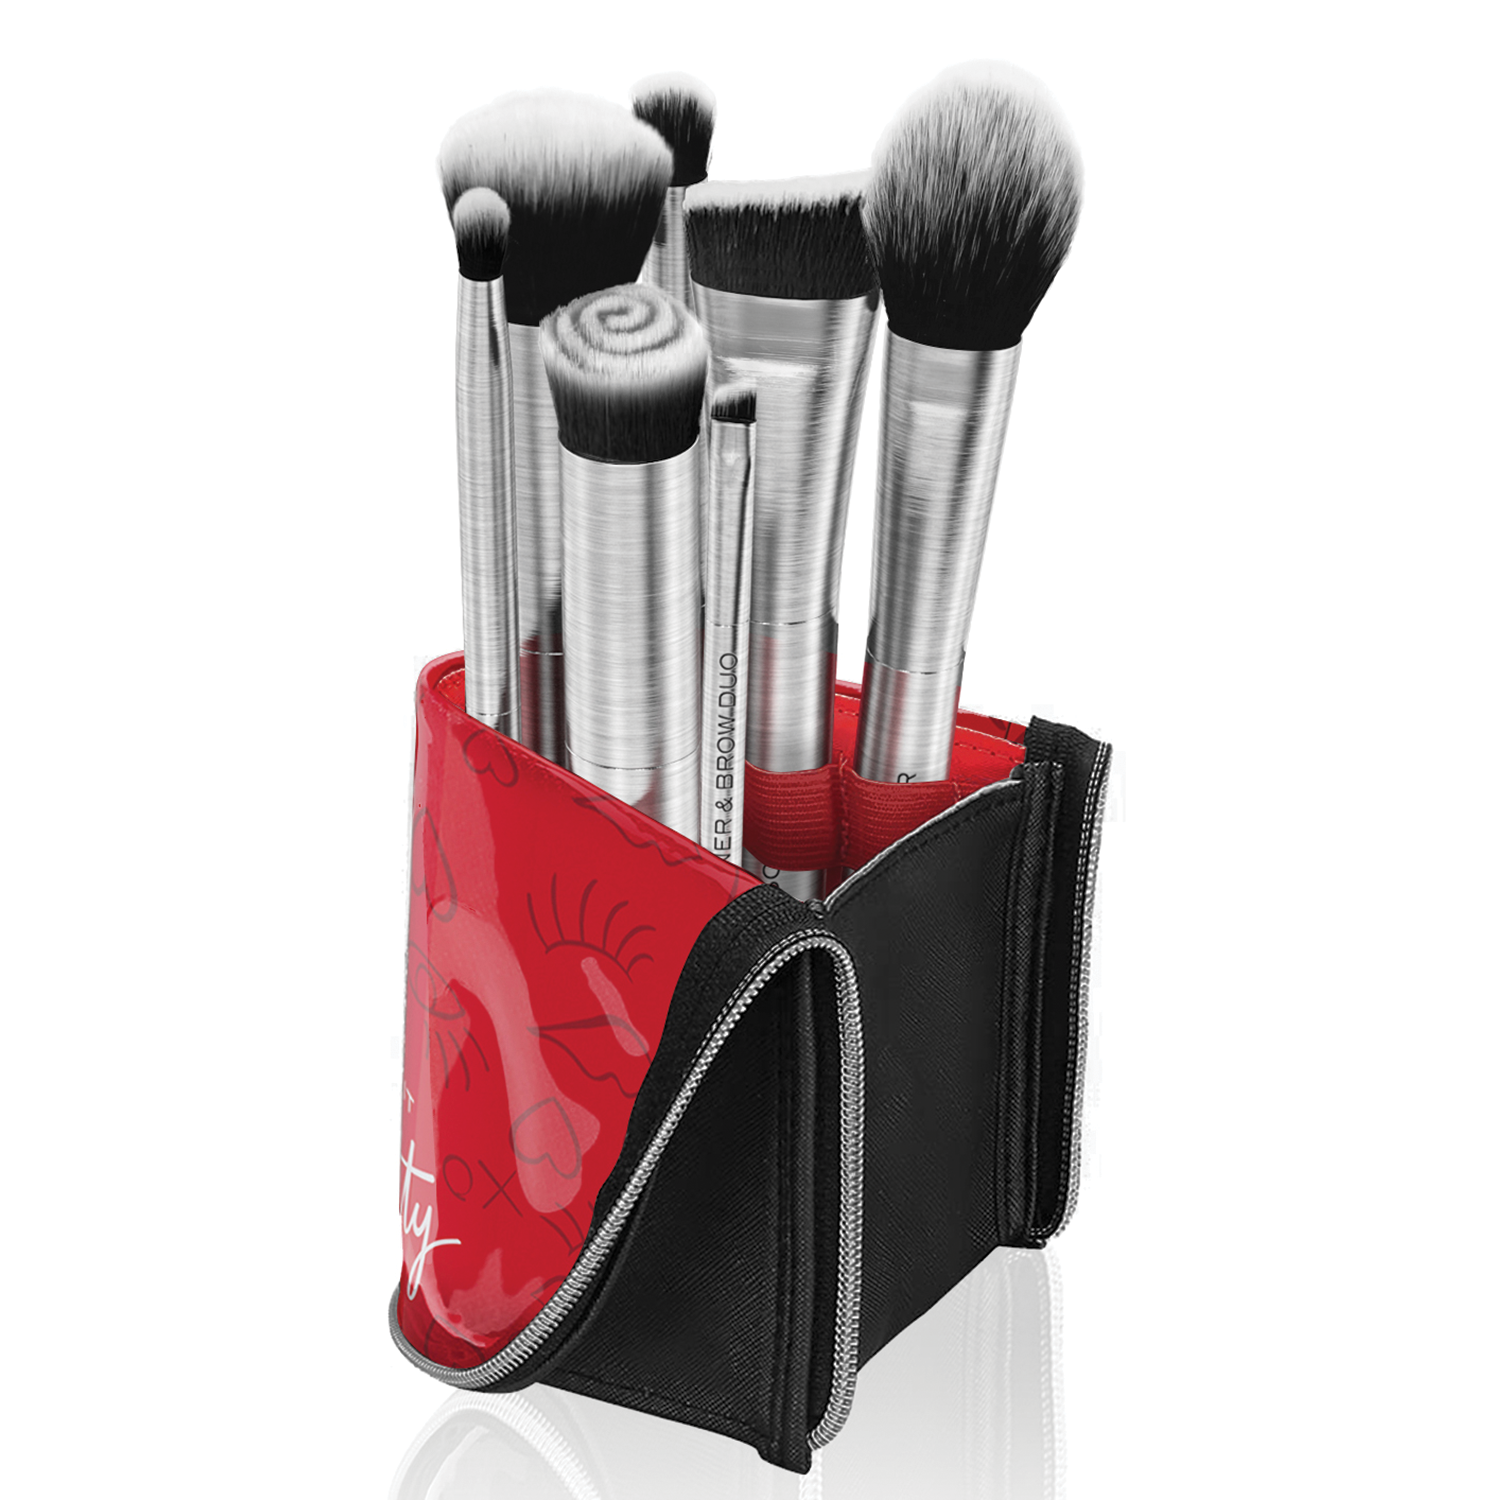 Make It Pretty Professional Makeup Brush Set & Travel Case